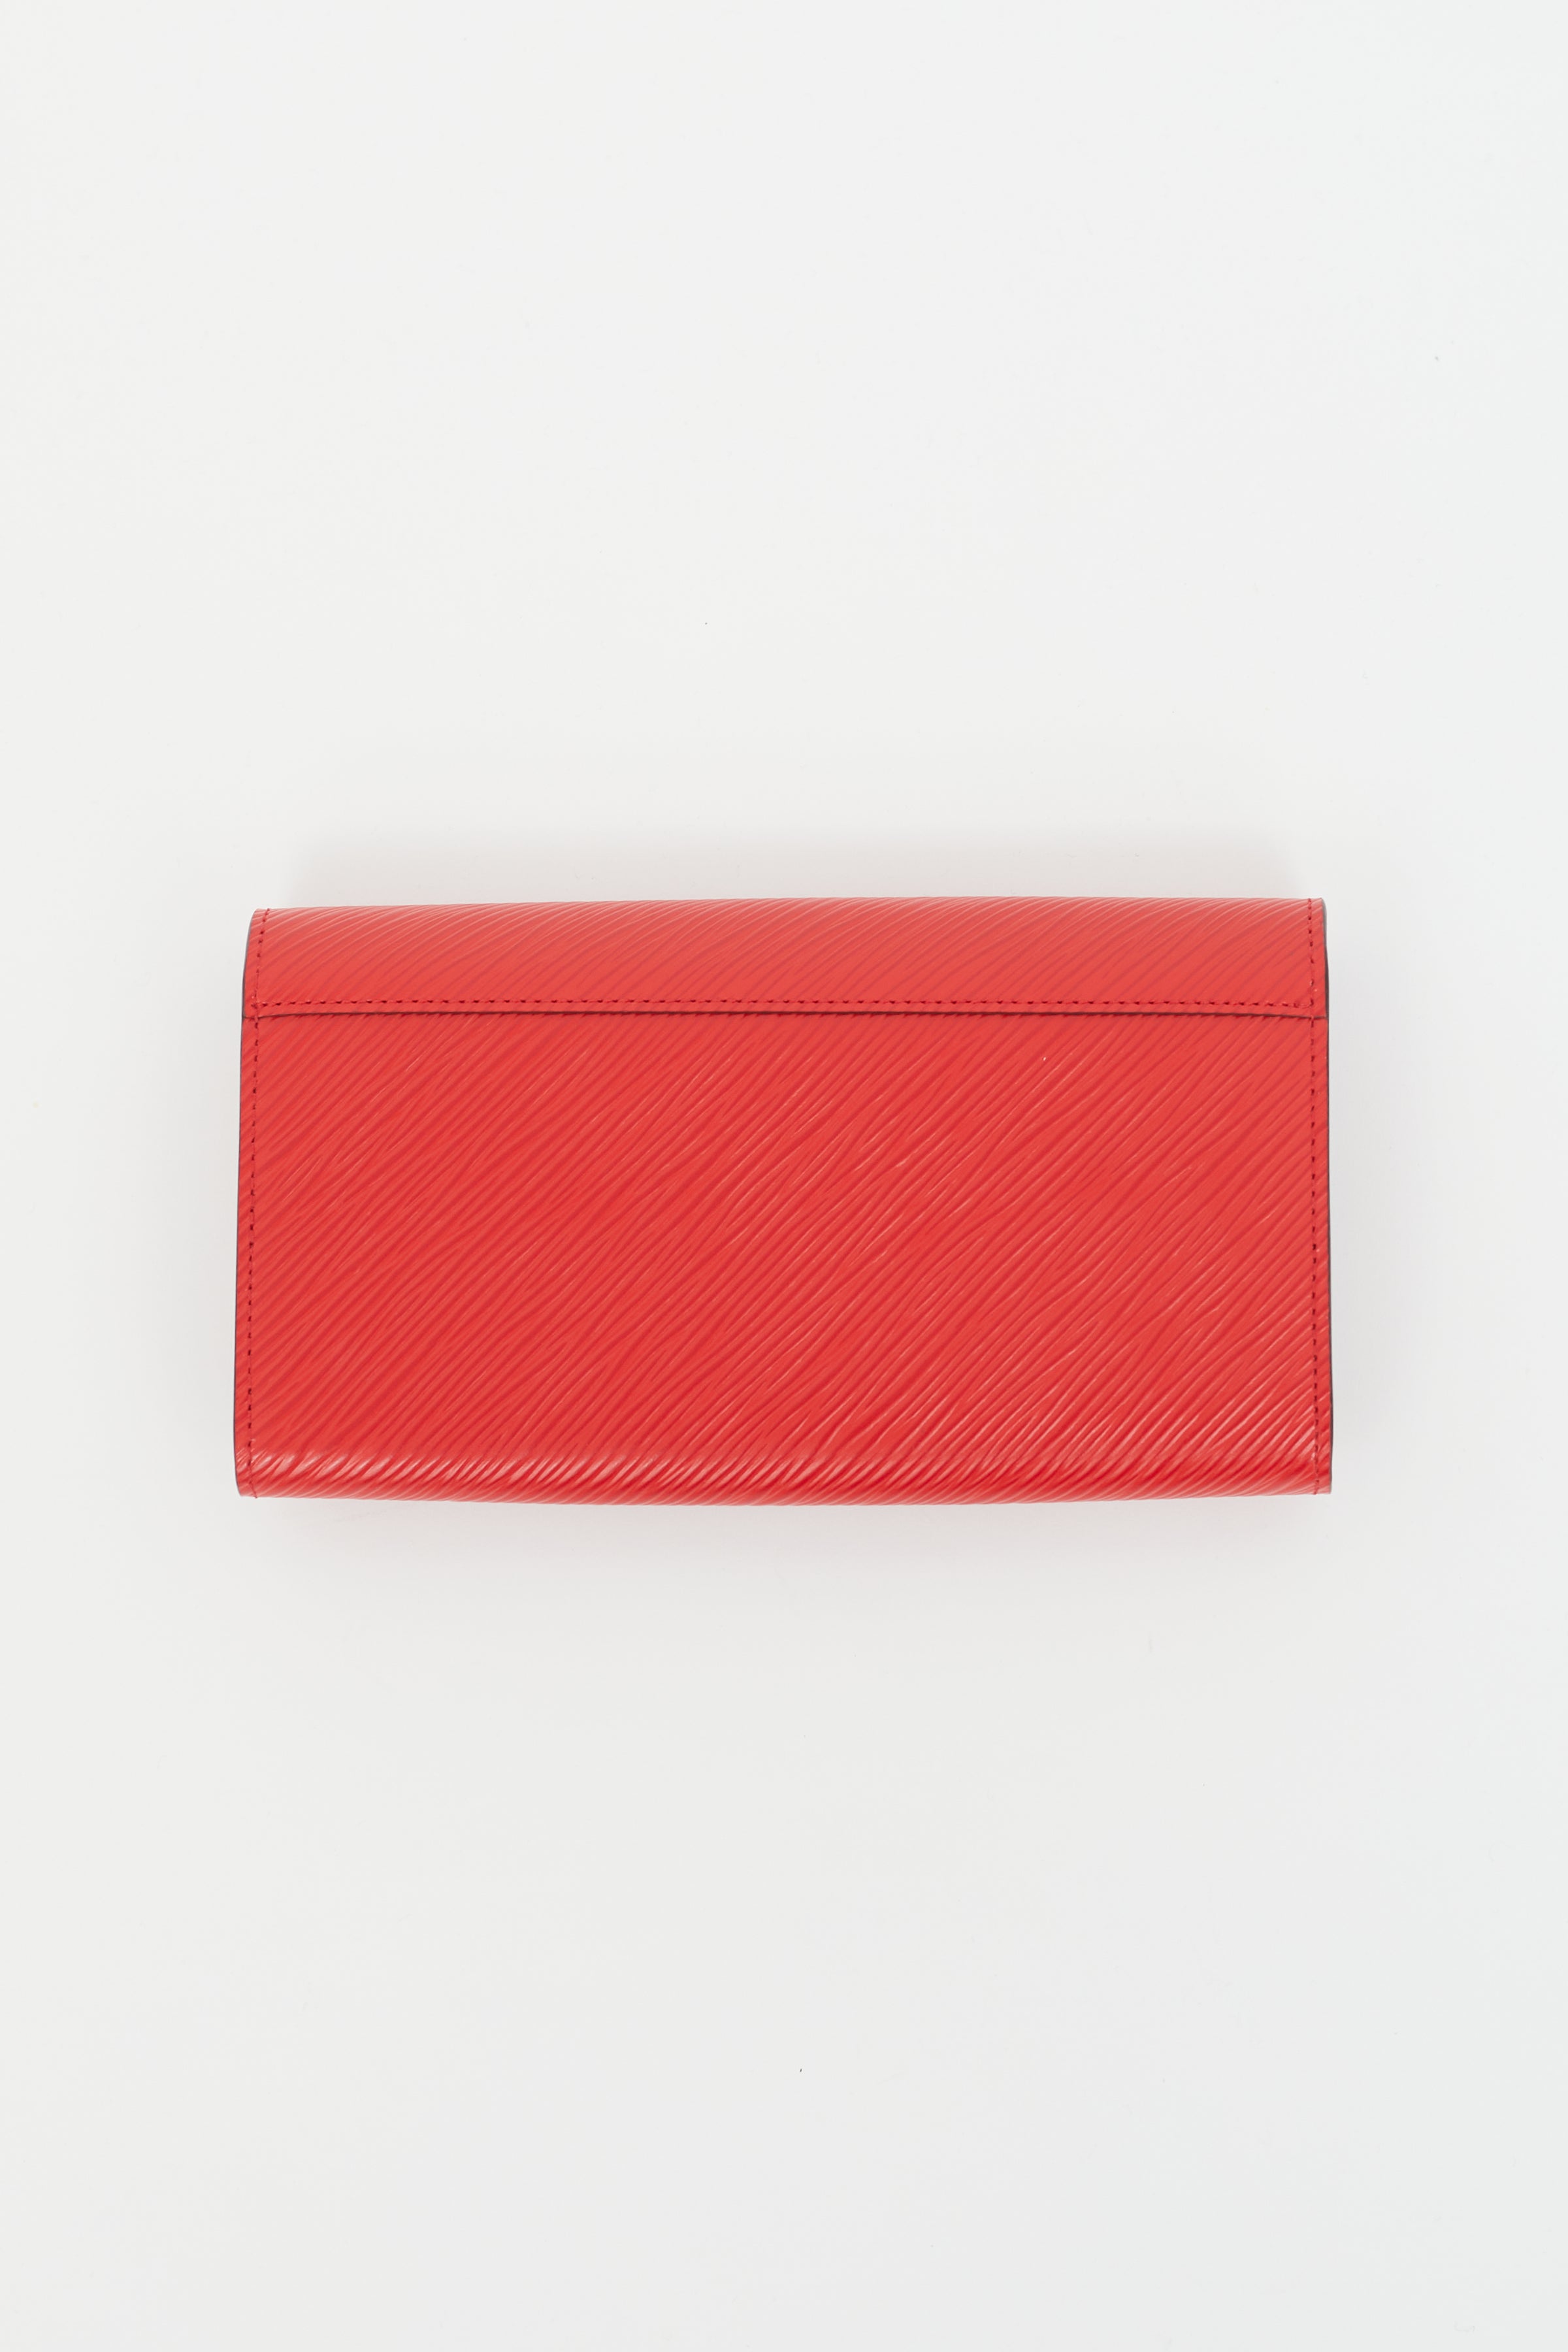 Louis Vuitton – Louis Vuitton Twist Wallet Black Epi Leather Red – Queen  Station